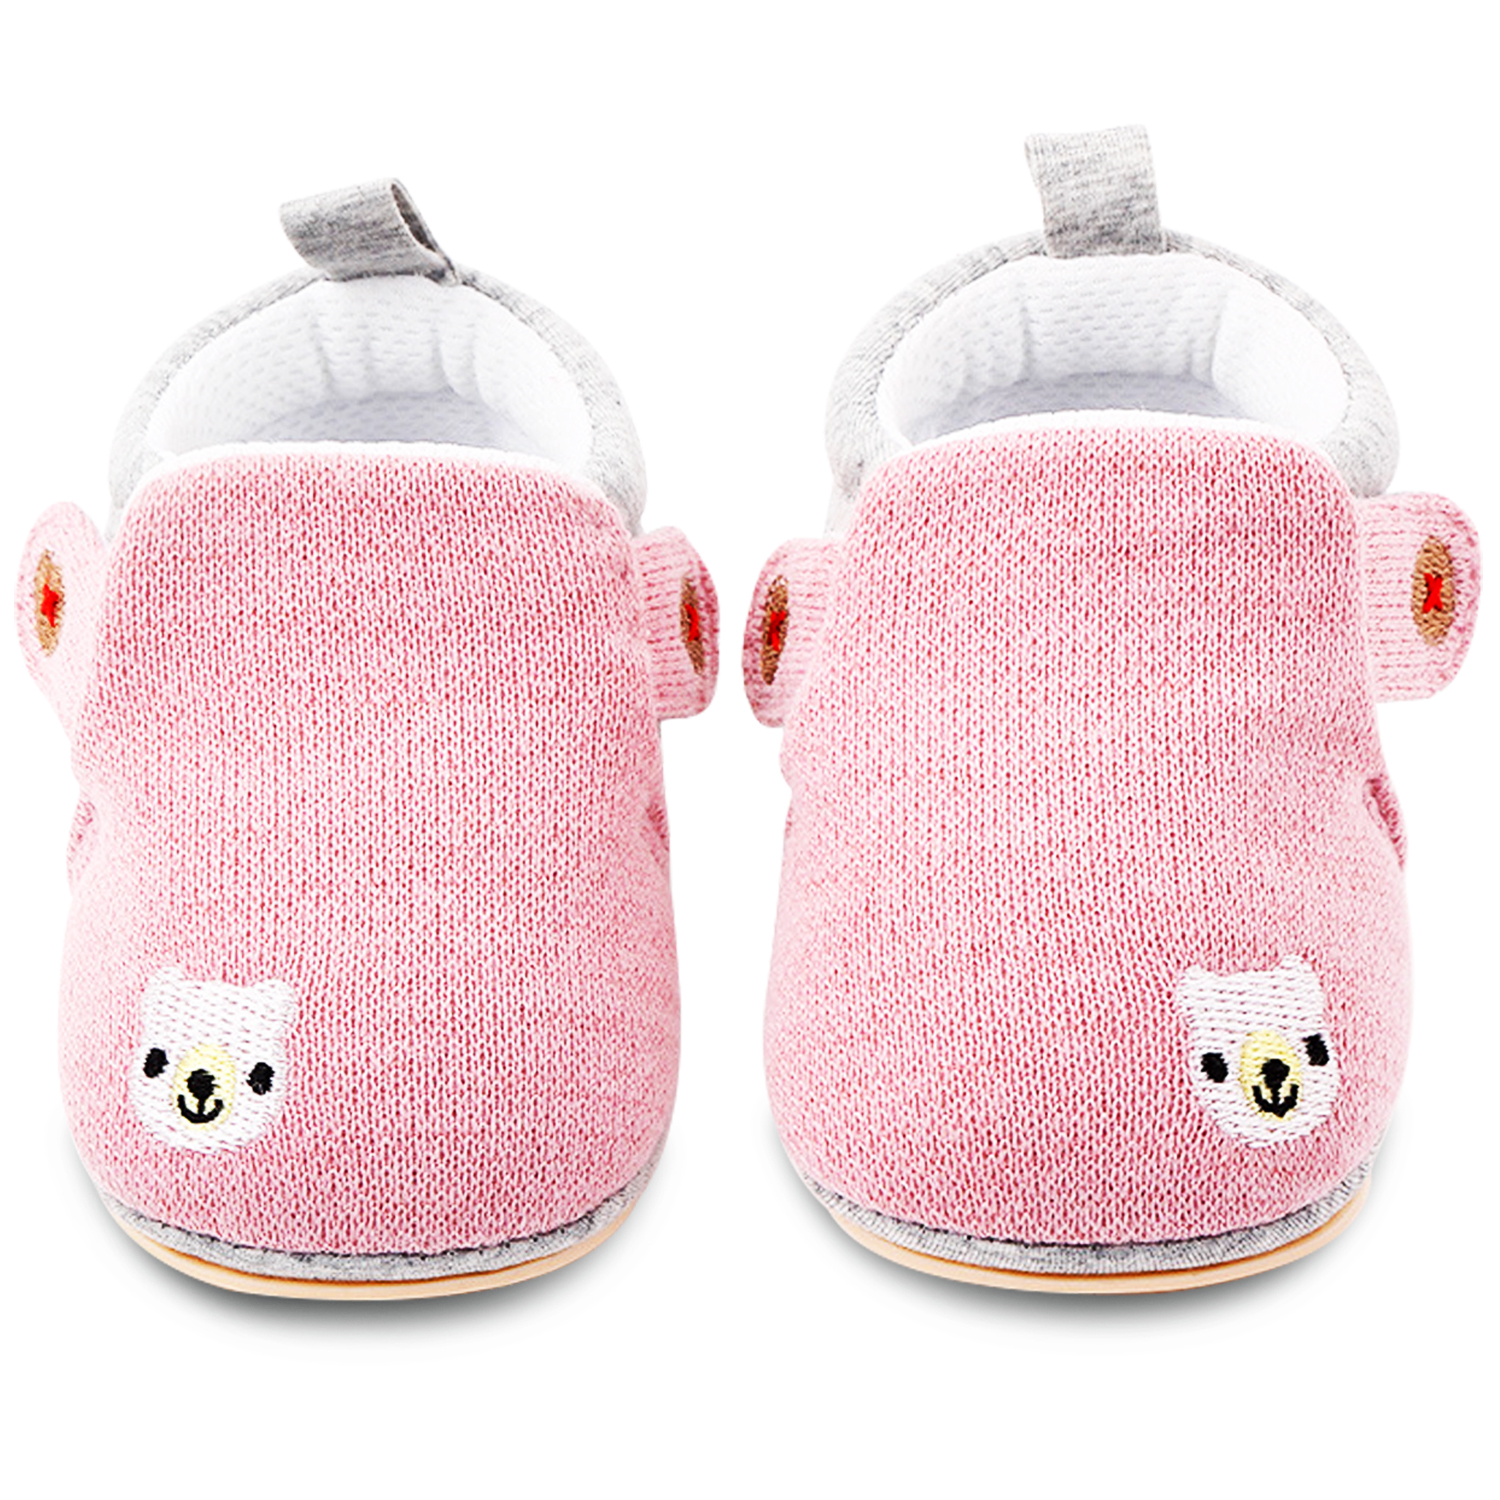 AQIYI Baby Boys Girls First Walking Shoes Toddler Cute Cartoon Sneakers Infant Non-Slip Velcro Shoes